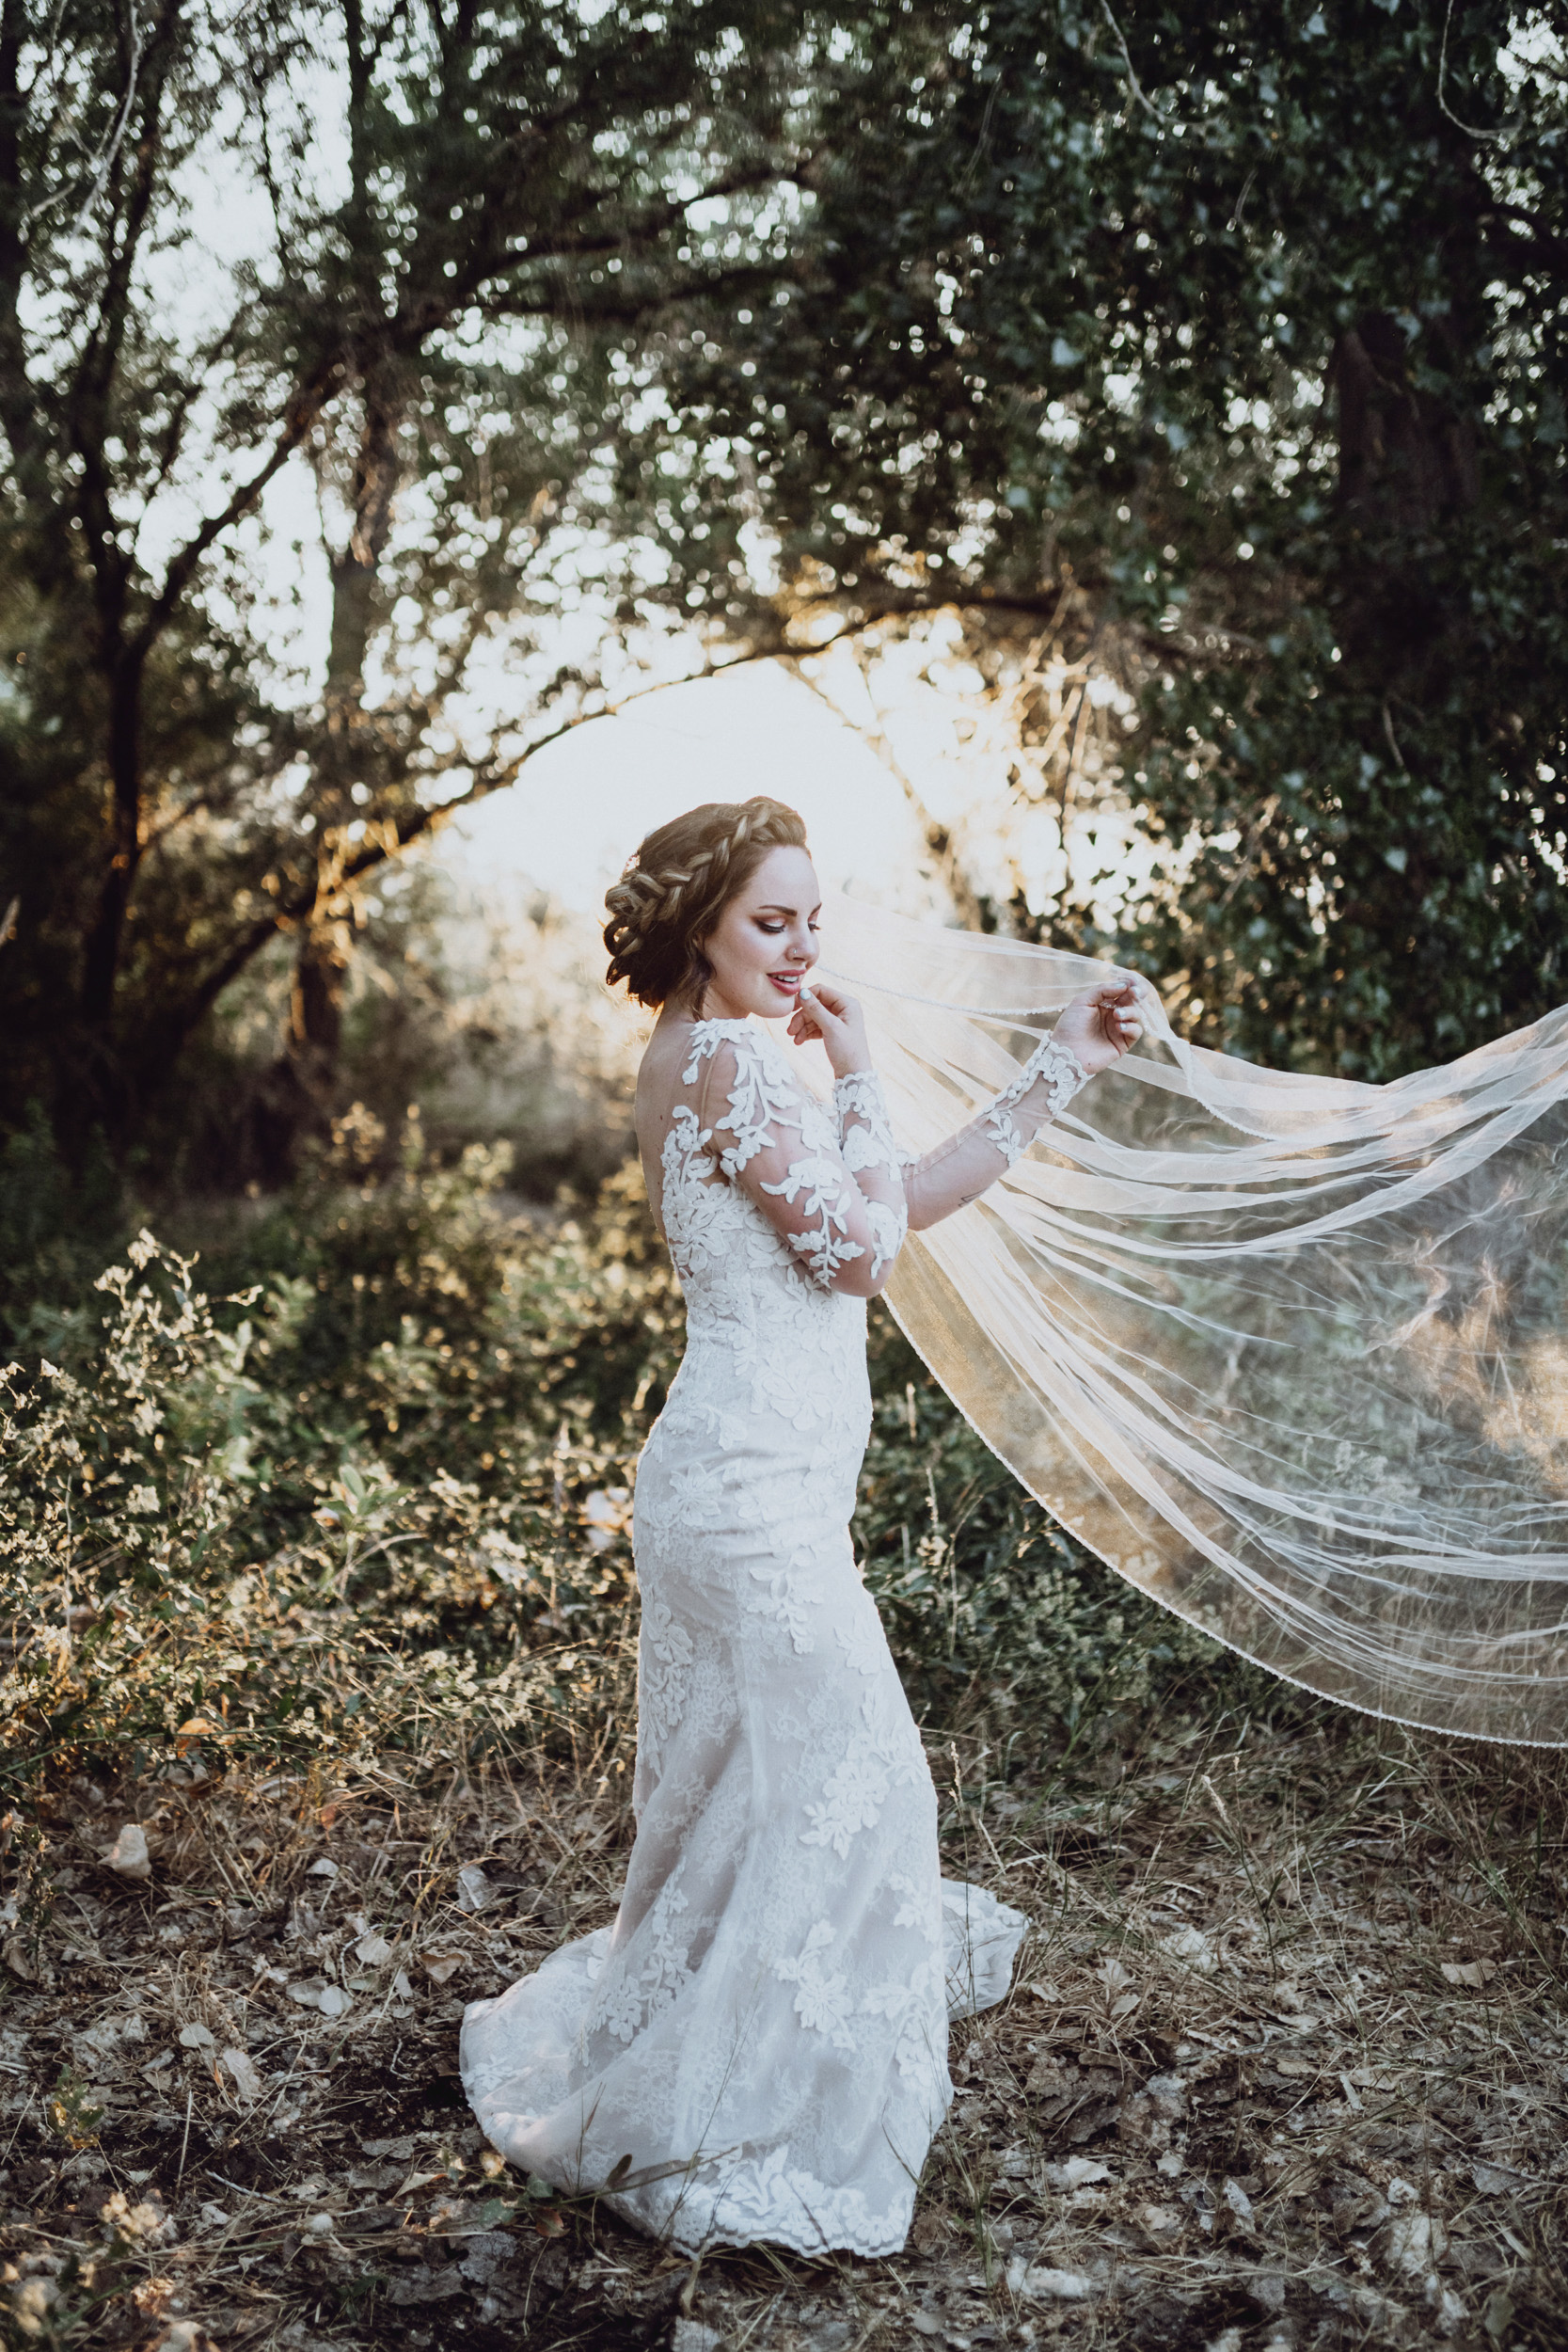 Bride in lace dress standing in grassy field 